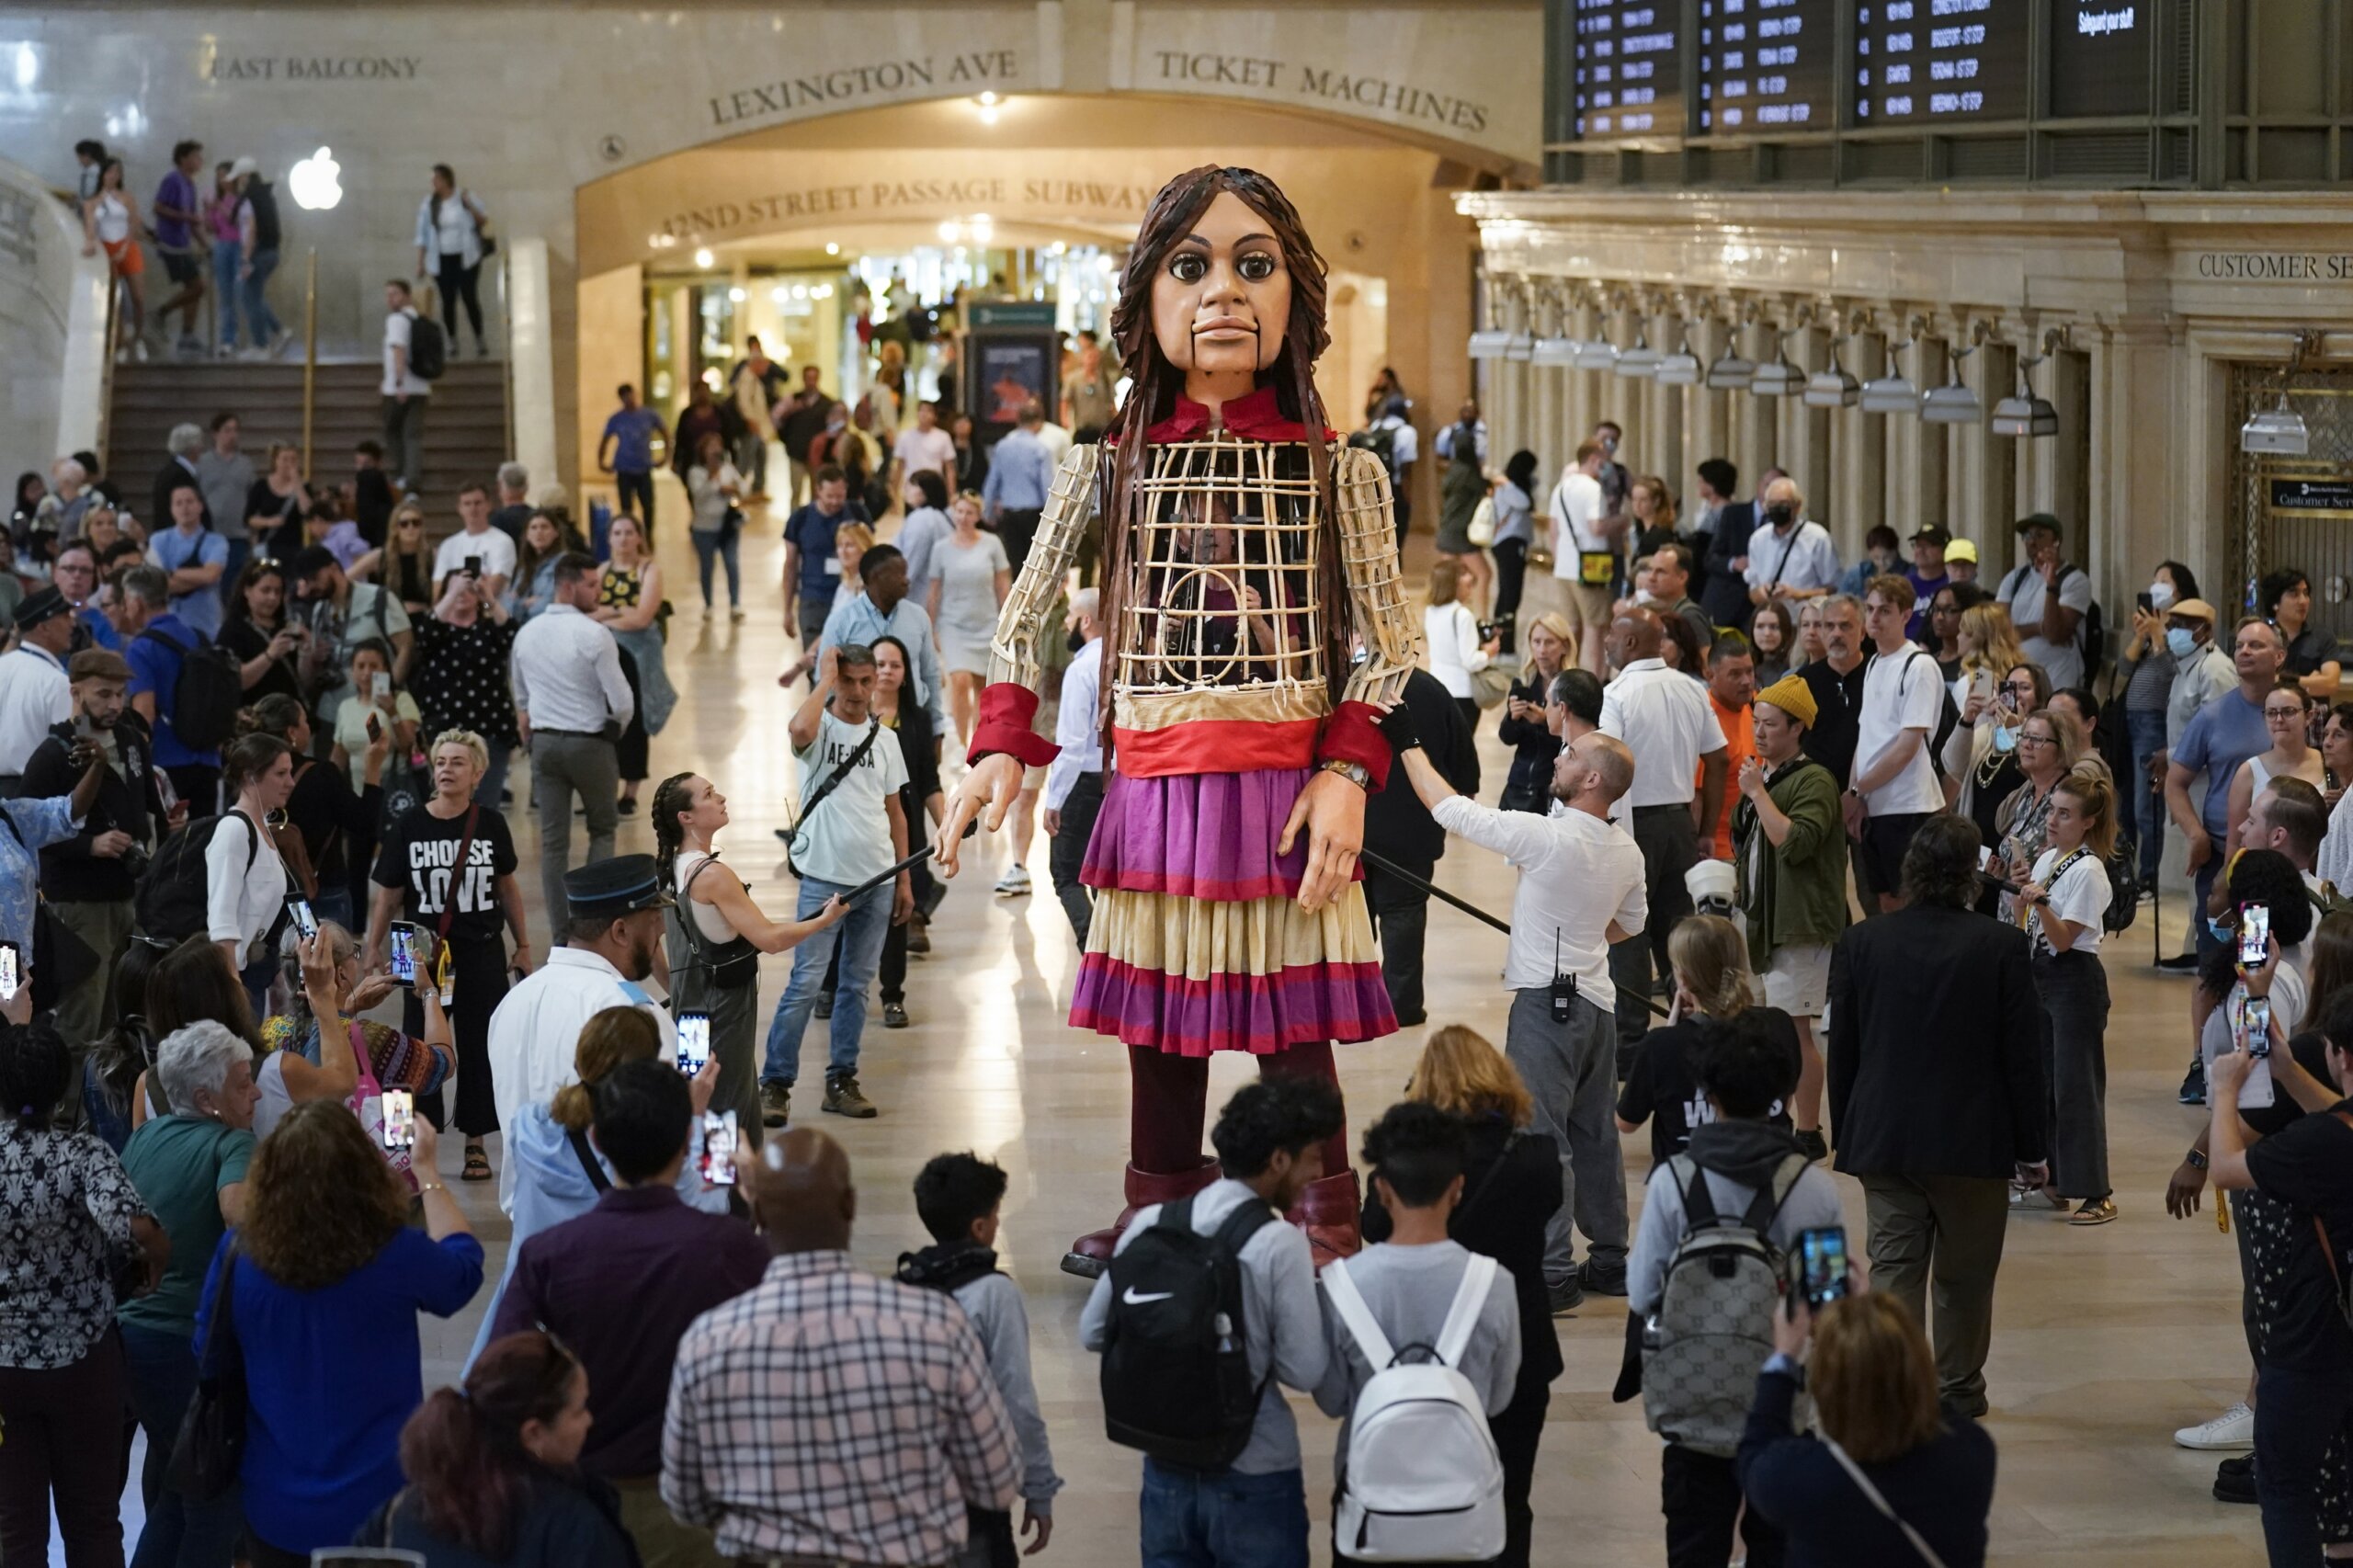 Meet Little Amal A puppet celebrating New York City’s roots WTOP News